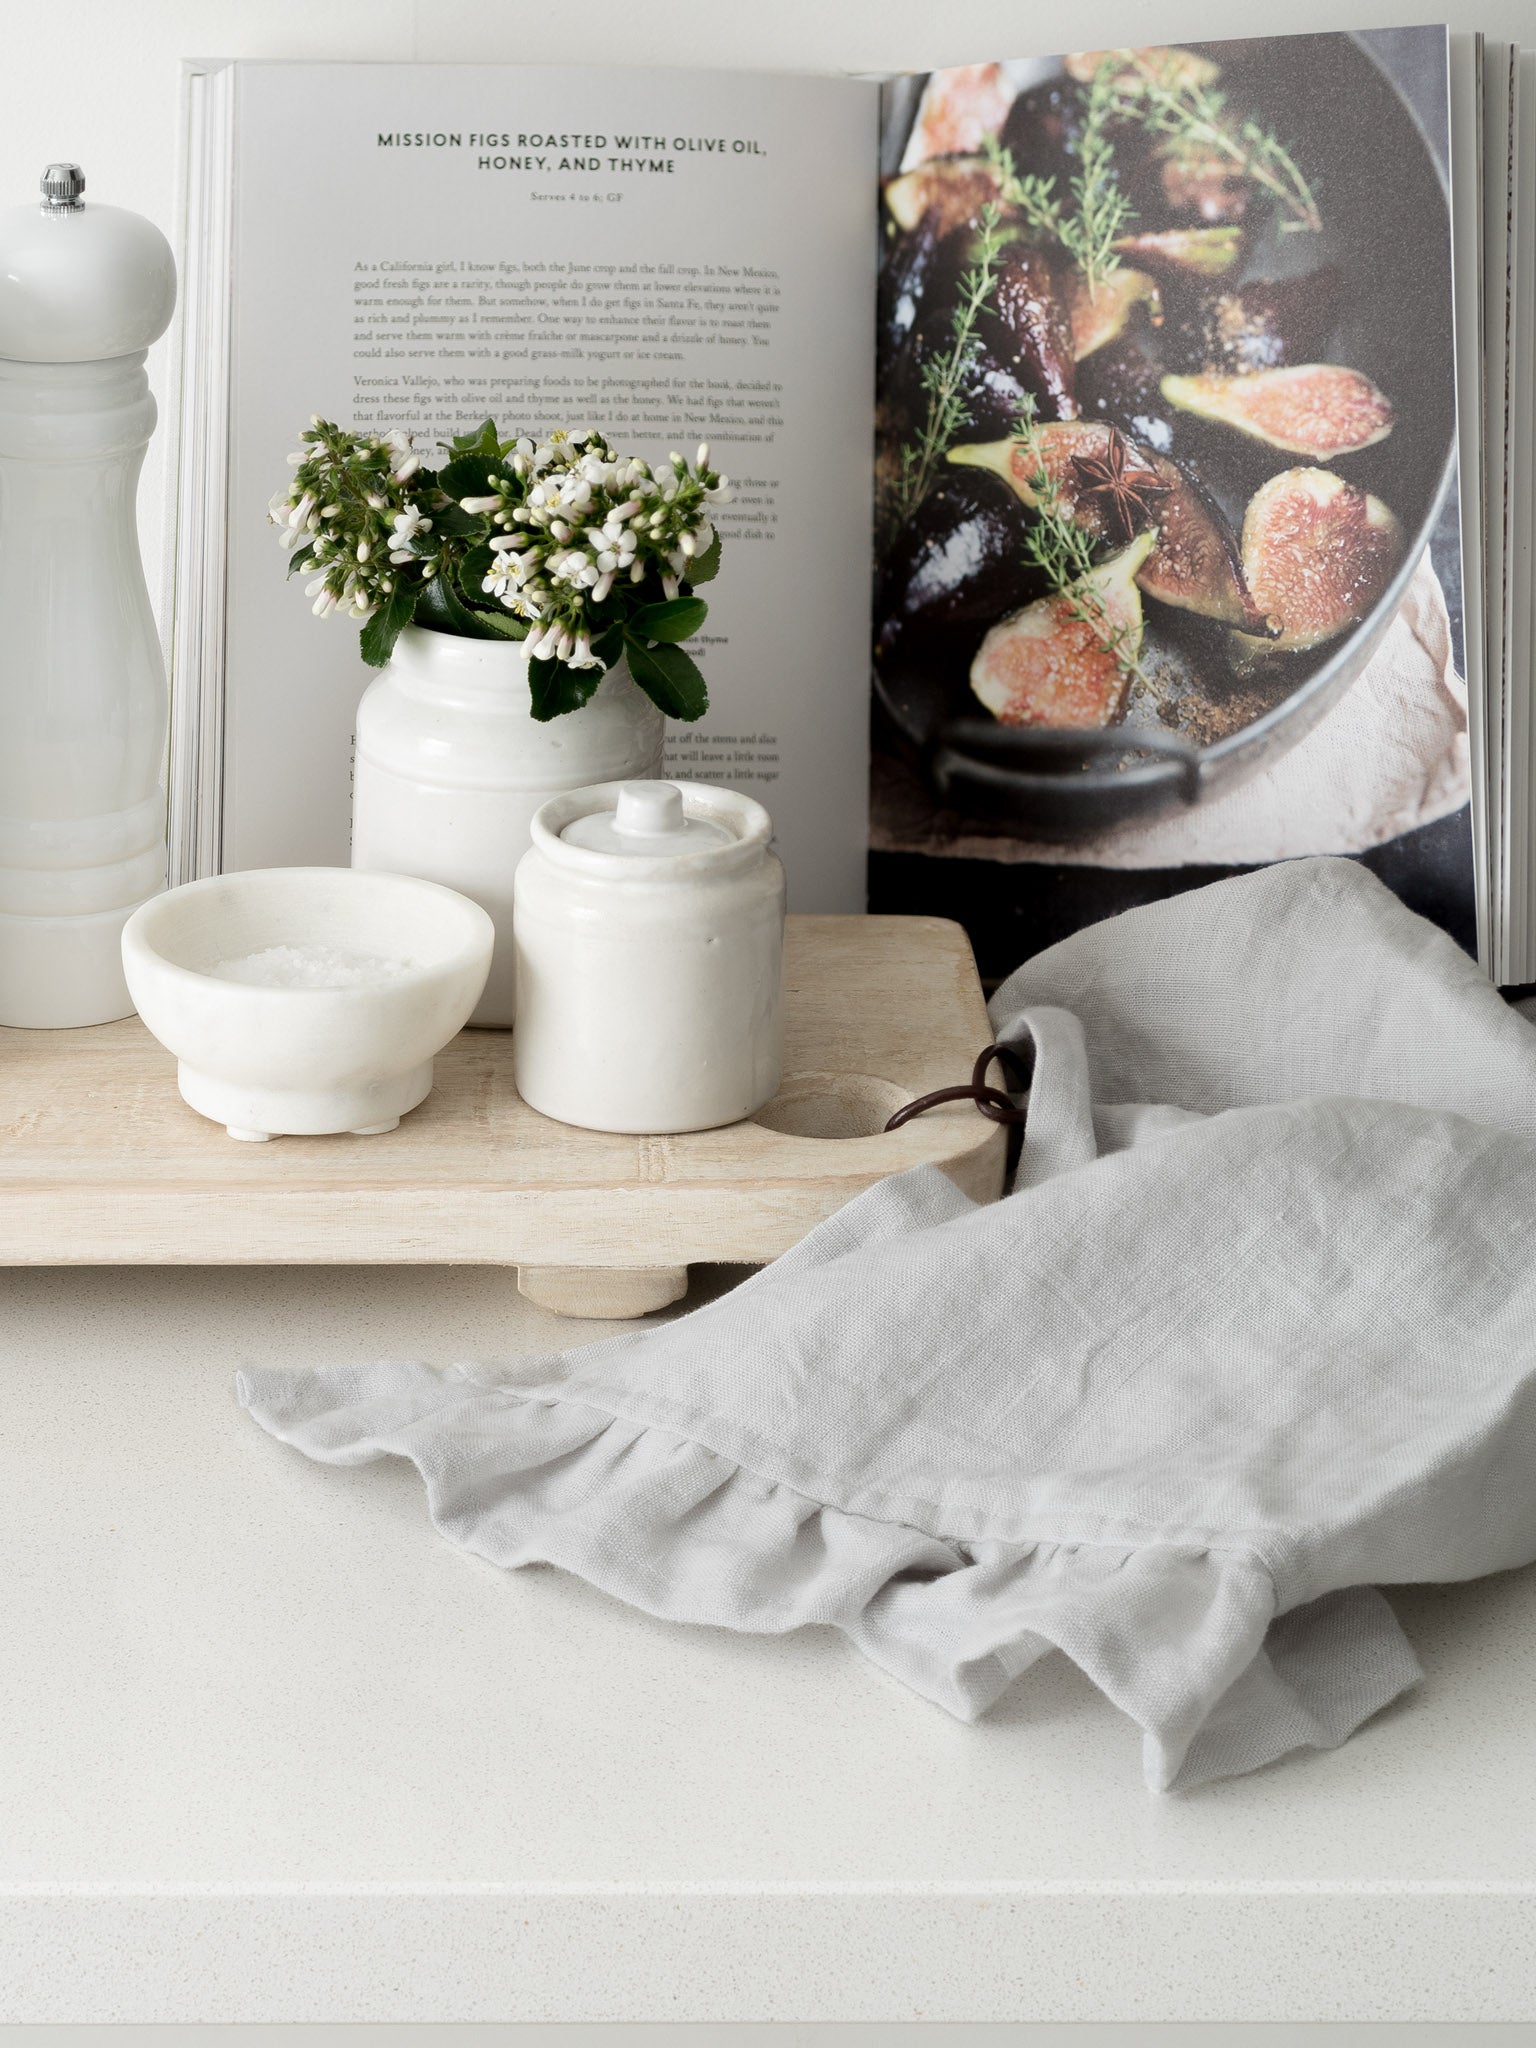 Set of Two Ruffle Linen Tea Towel in Charcoal Grey & Dove Grey (Worth £28)